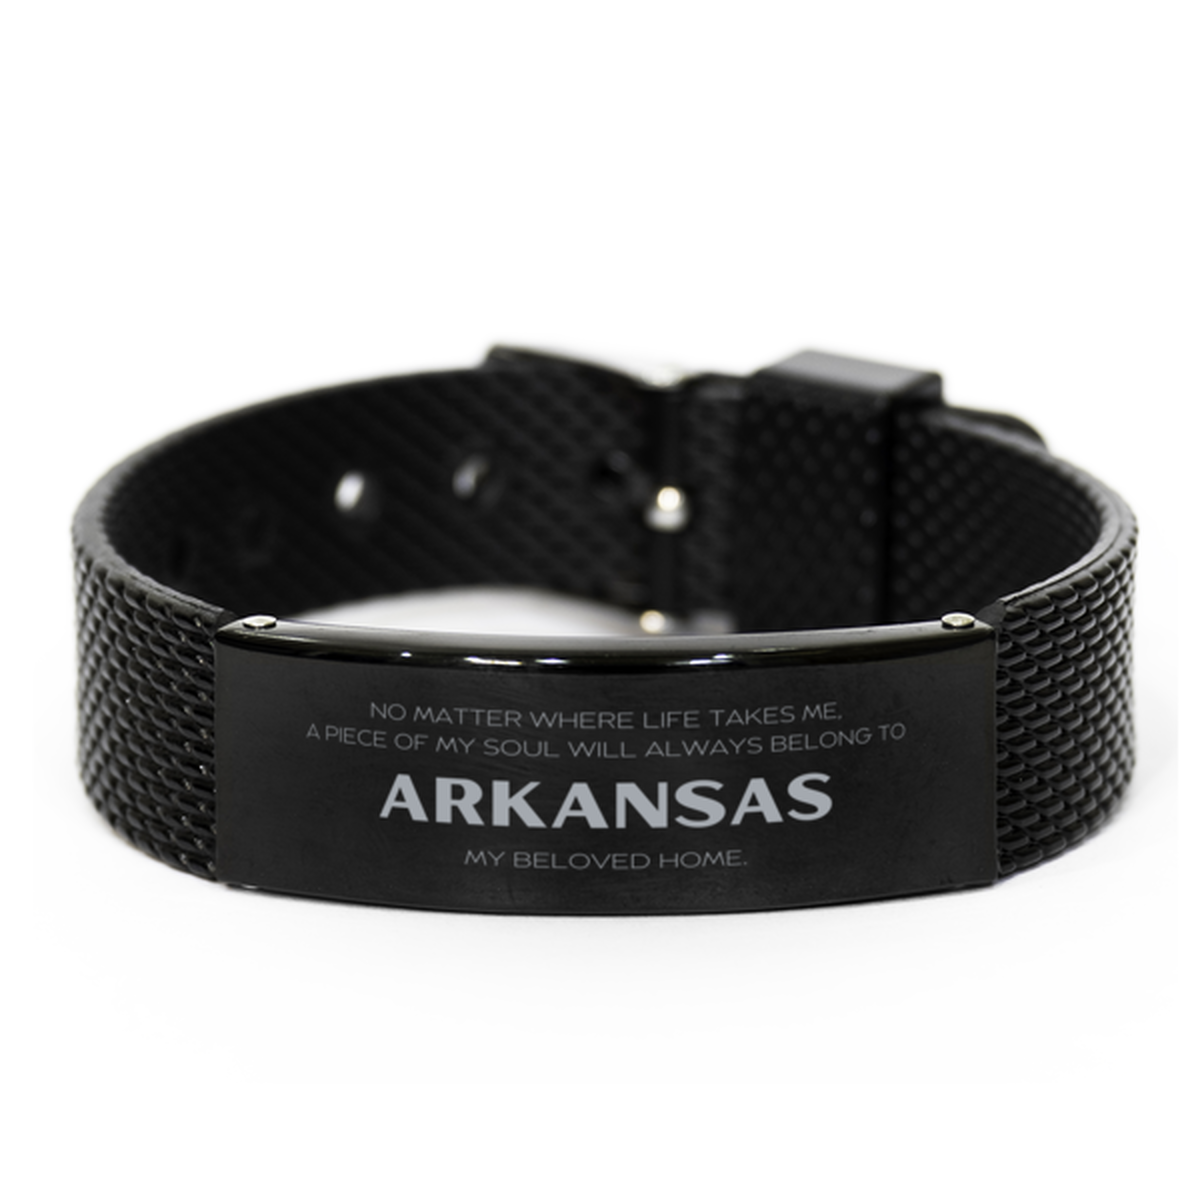 Love Arkansas State Gifts, My soul will always belong to Arkansas, Proud Black Shark Mesh Bracelet, Birthday Unique Gifts For Arkansas Men, Women, Friends